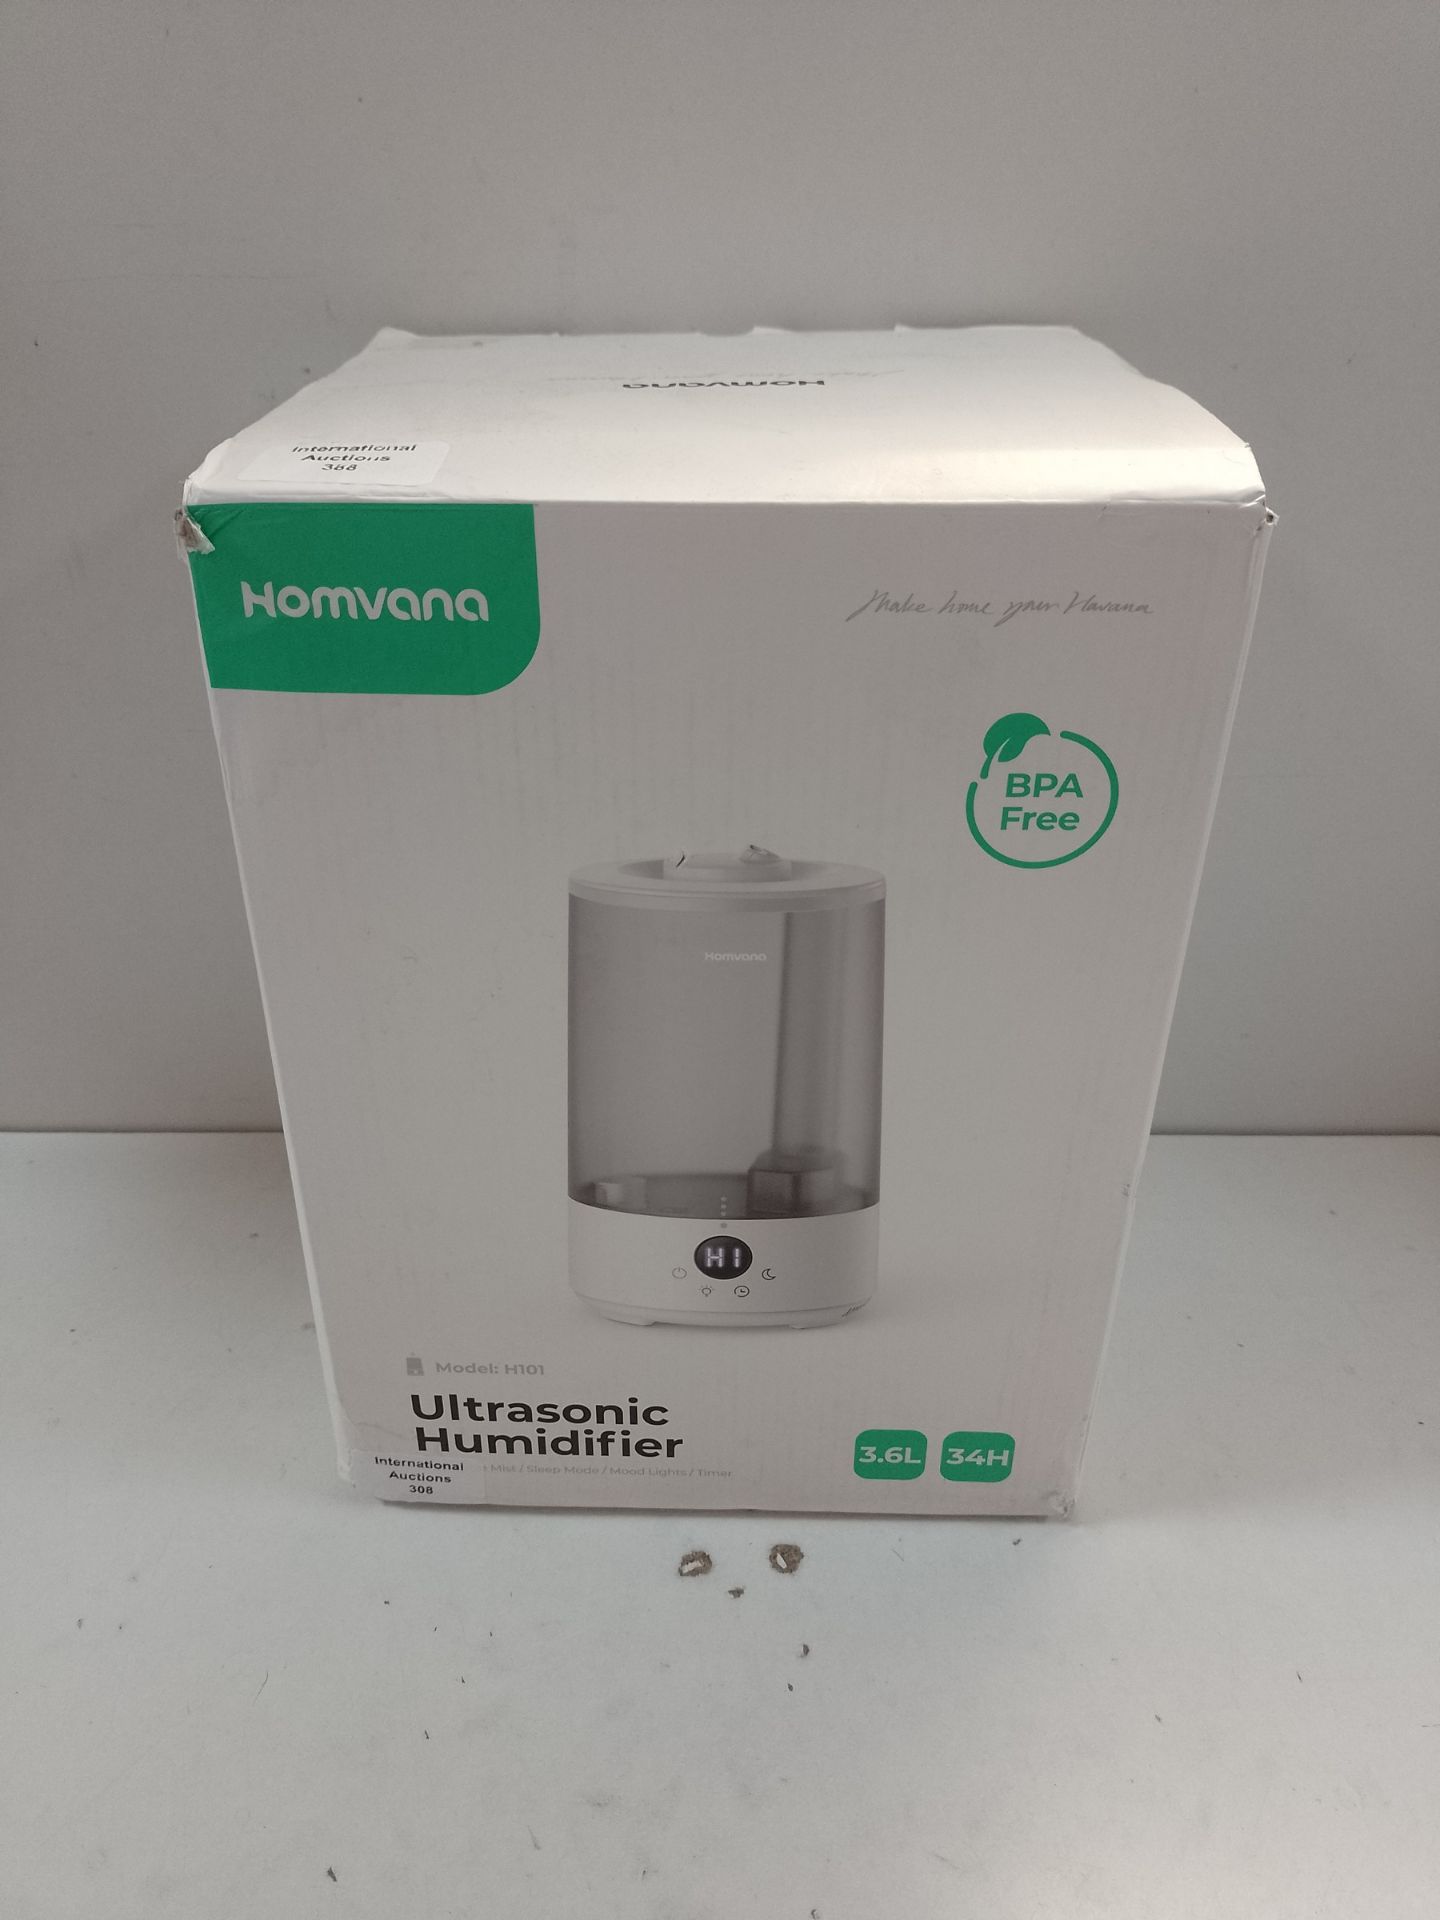 RRP £37.95 Homvana Humidifier for Bedroom - Image 2 of 2